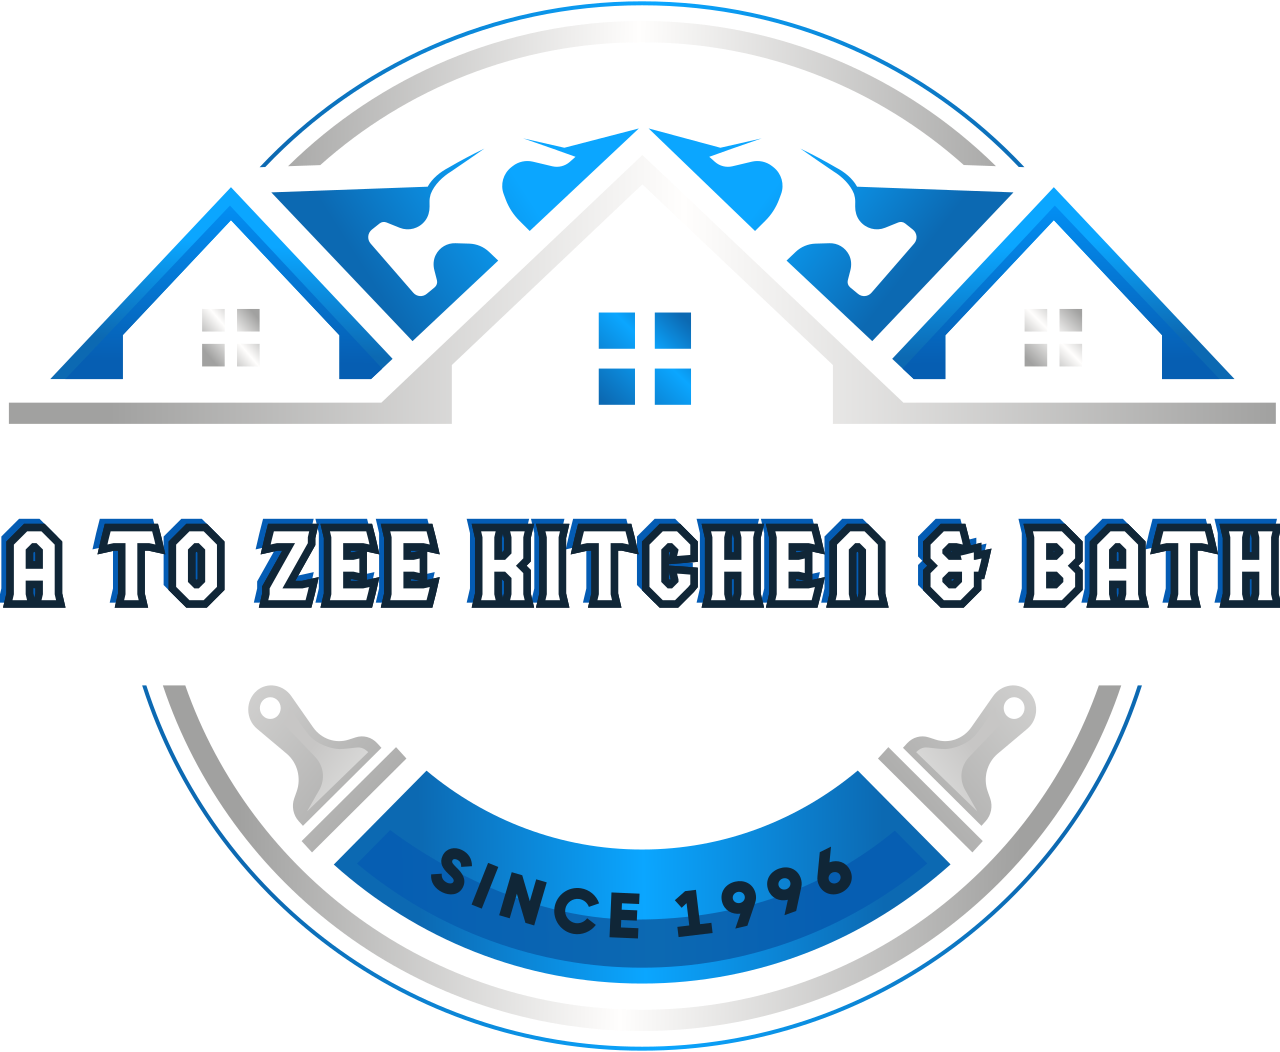 A to Zee Kitchen & Bath's logo